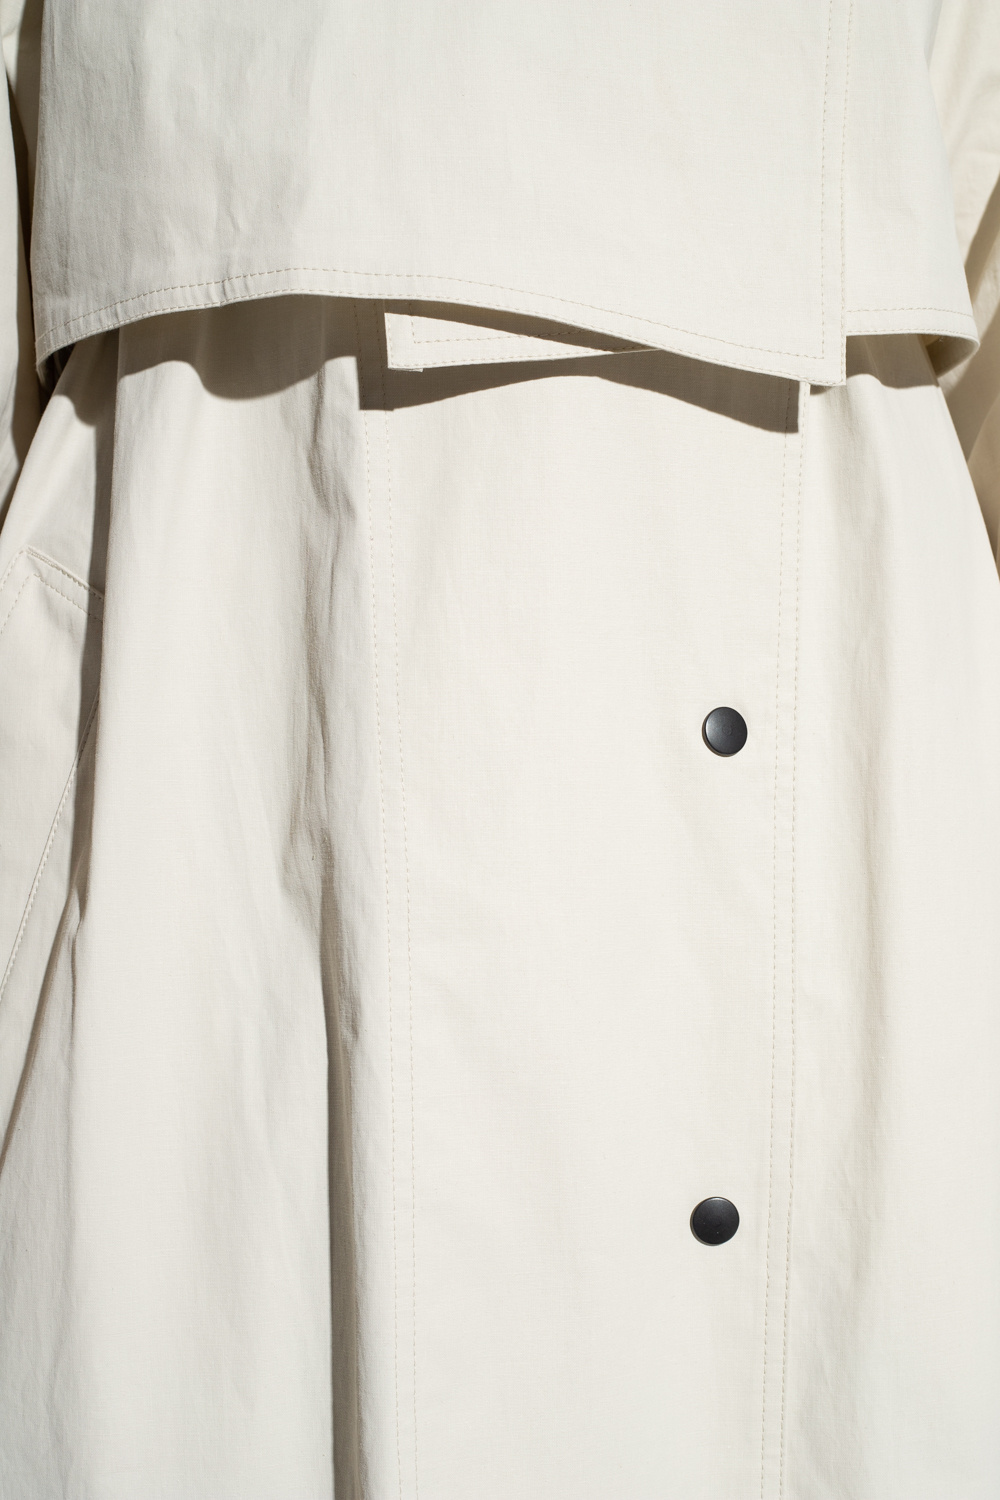 LOUIS VUITTON Mackintosh Raincoat in Beige Cotton Size 42 at